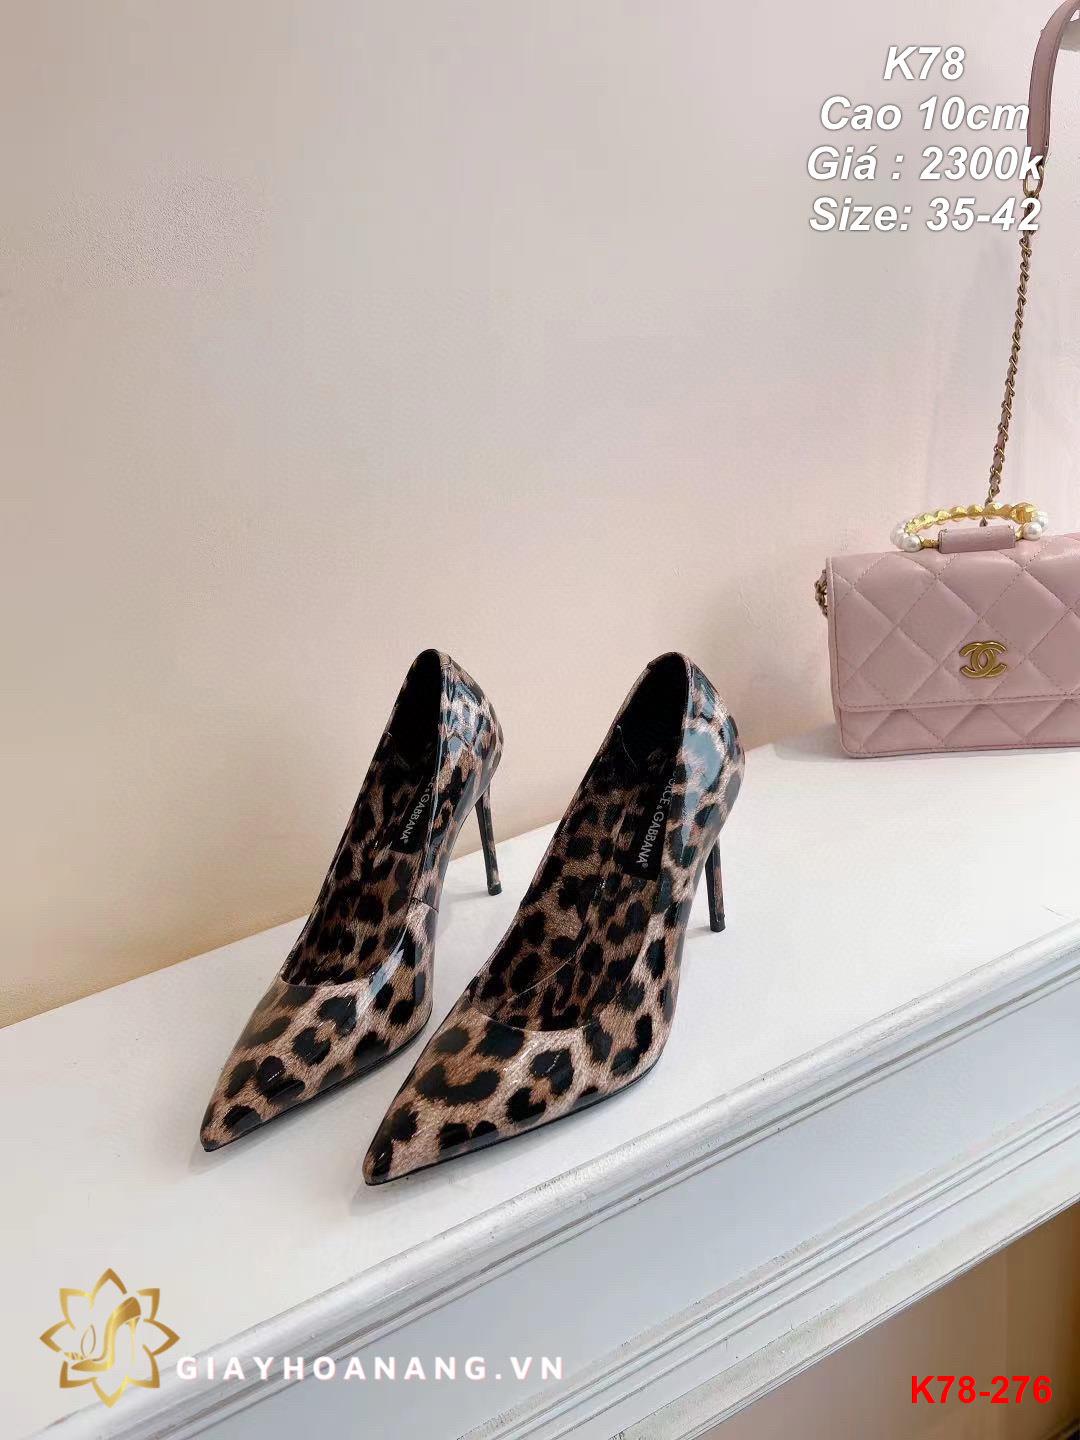 K78-276 Dolce & Gabbana giày cao 10cm siêu cấp